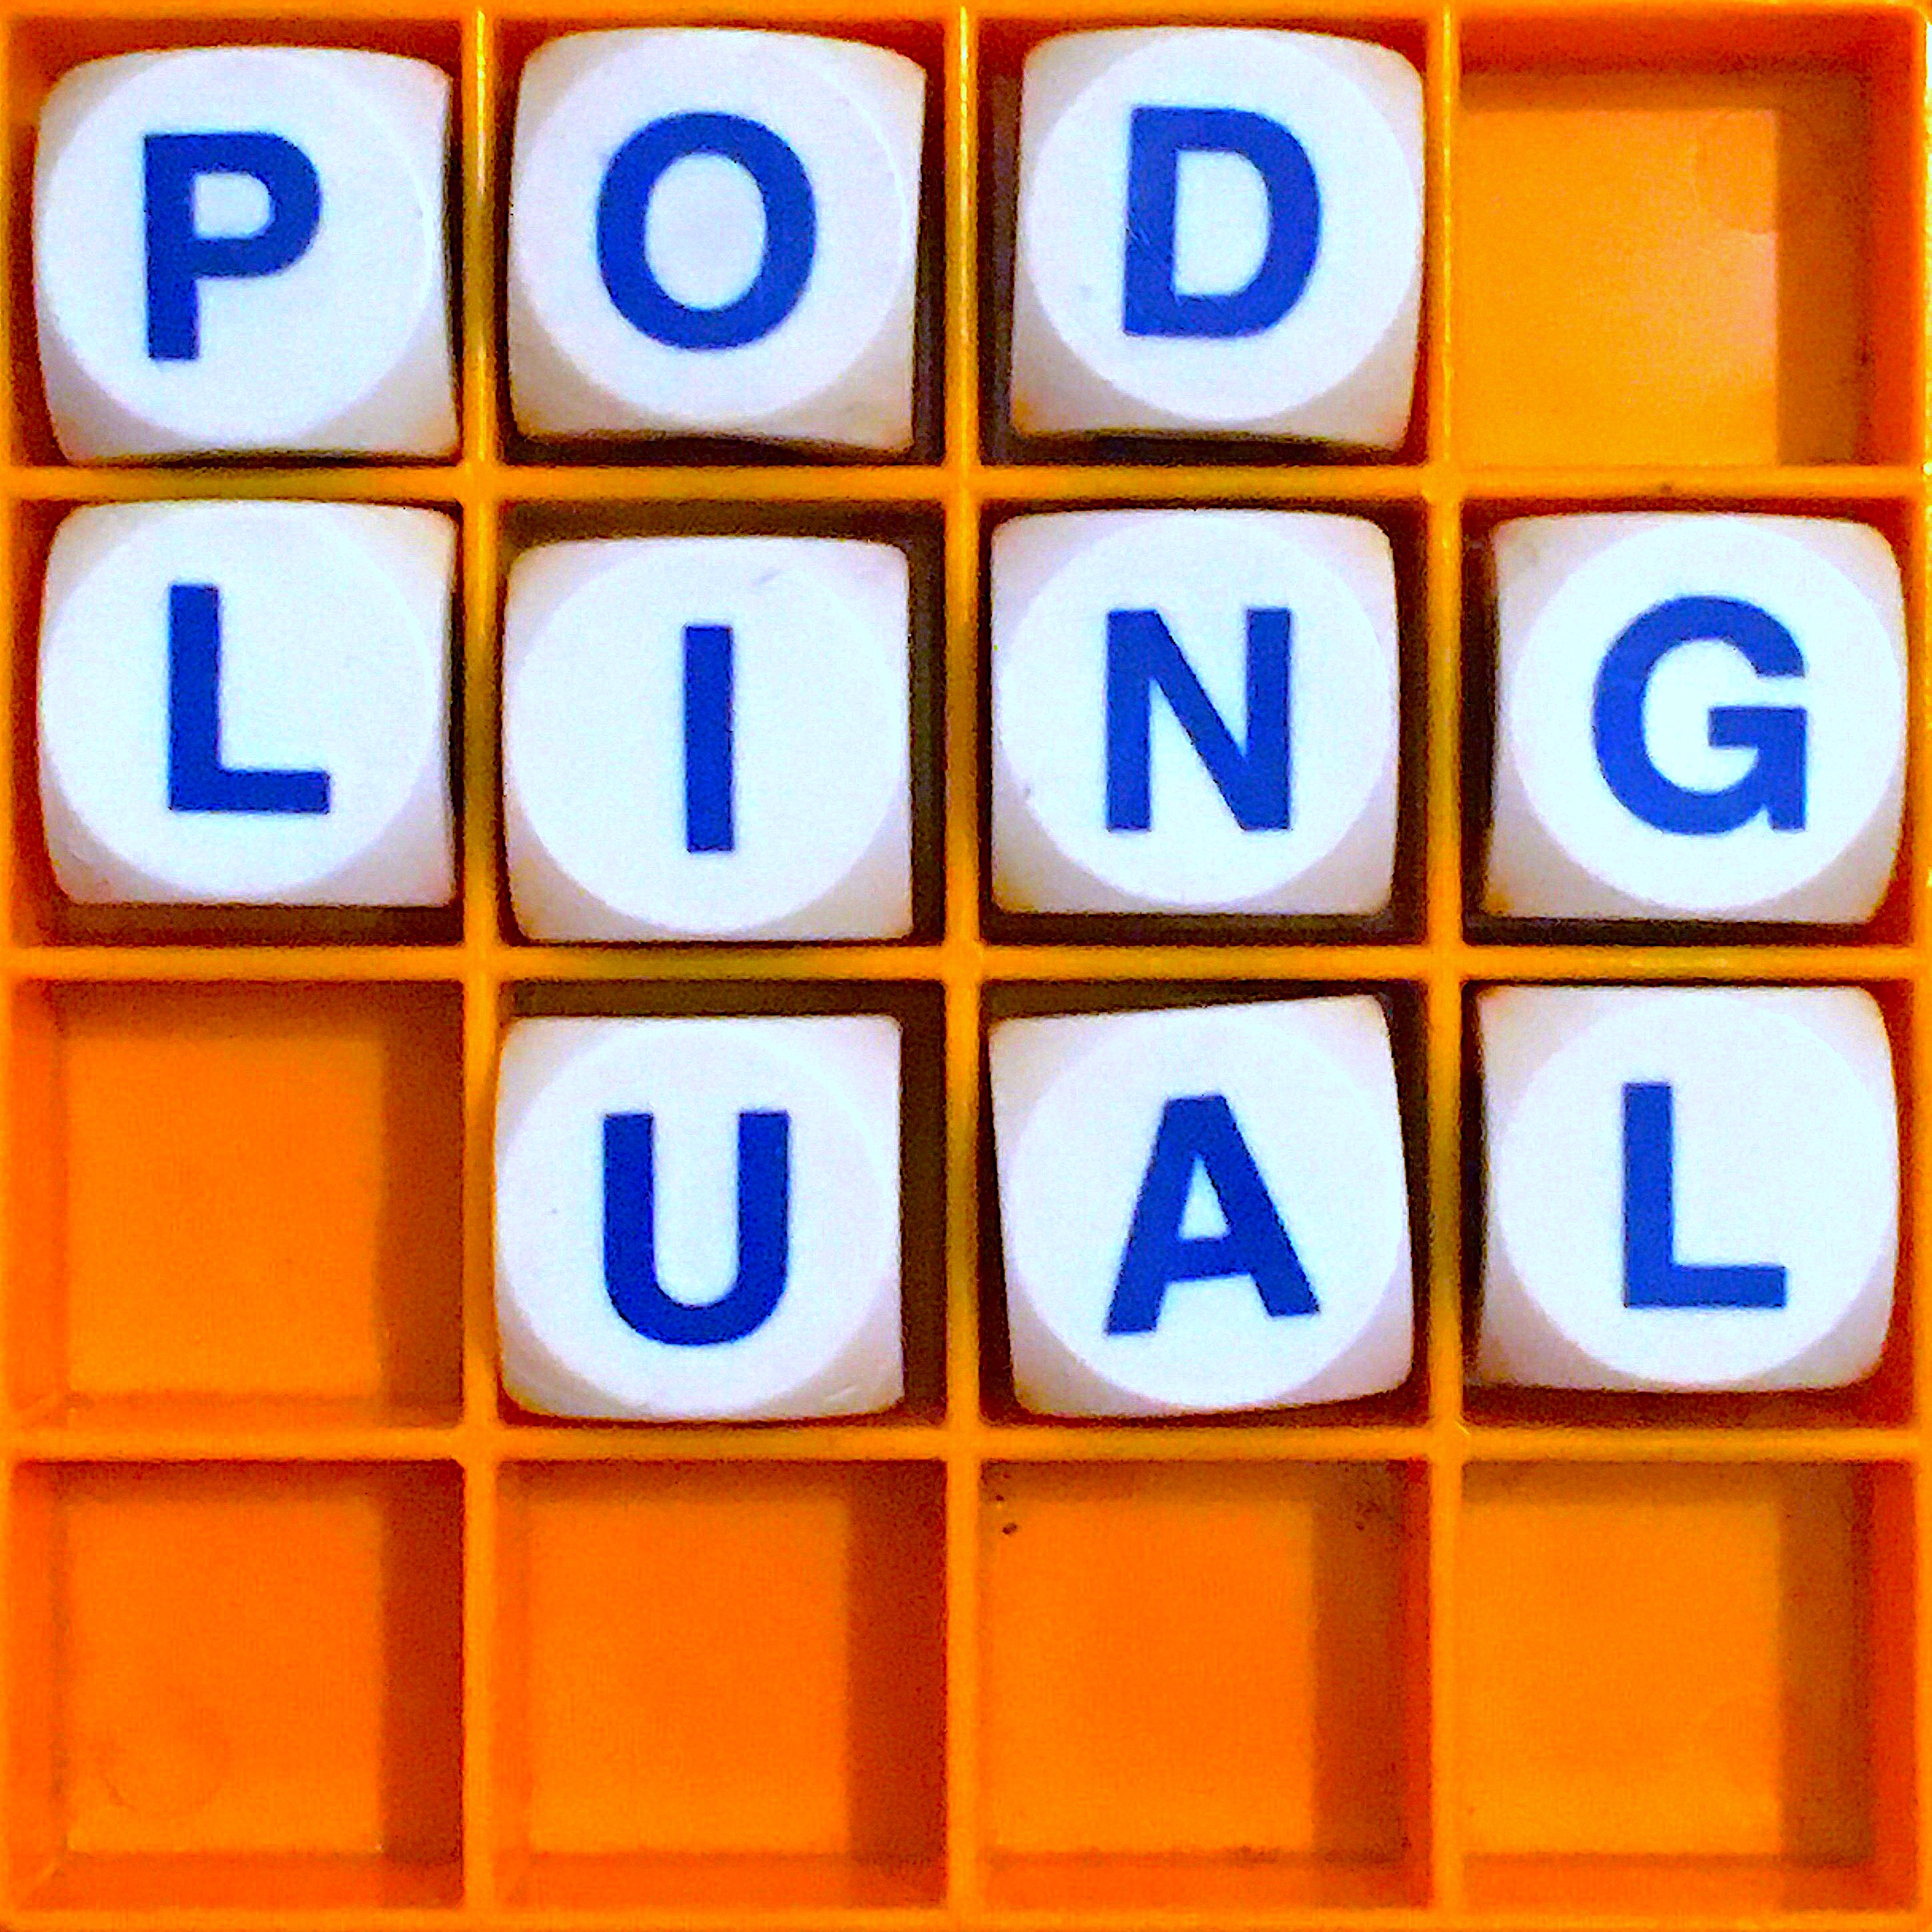 Thumbnail for "131. Podlingual".